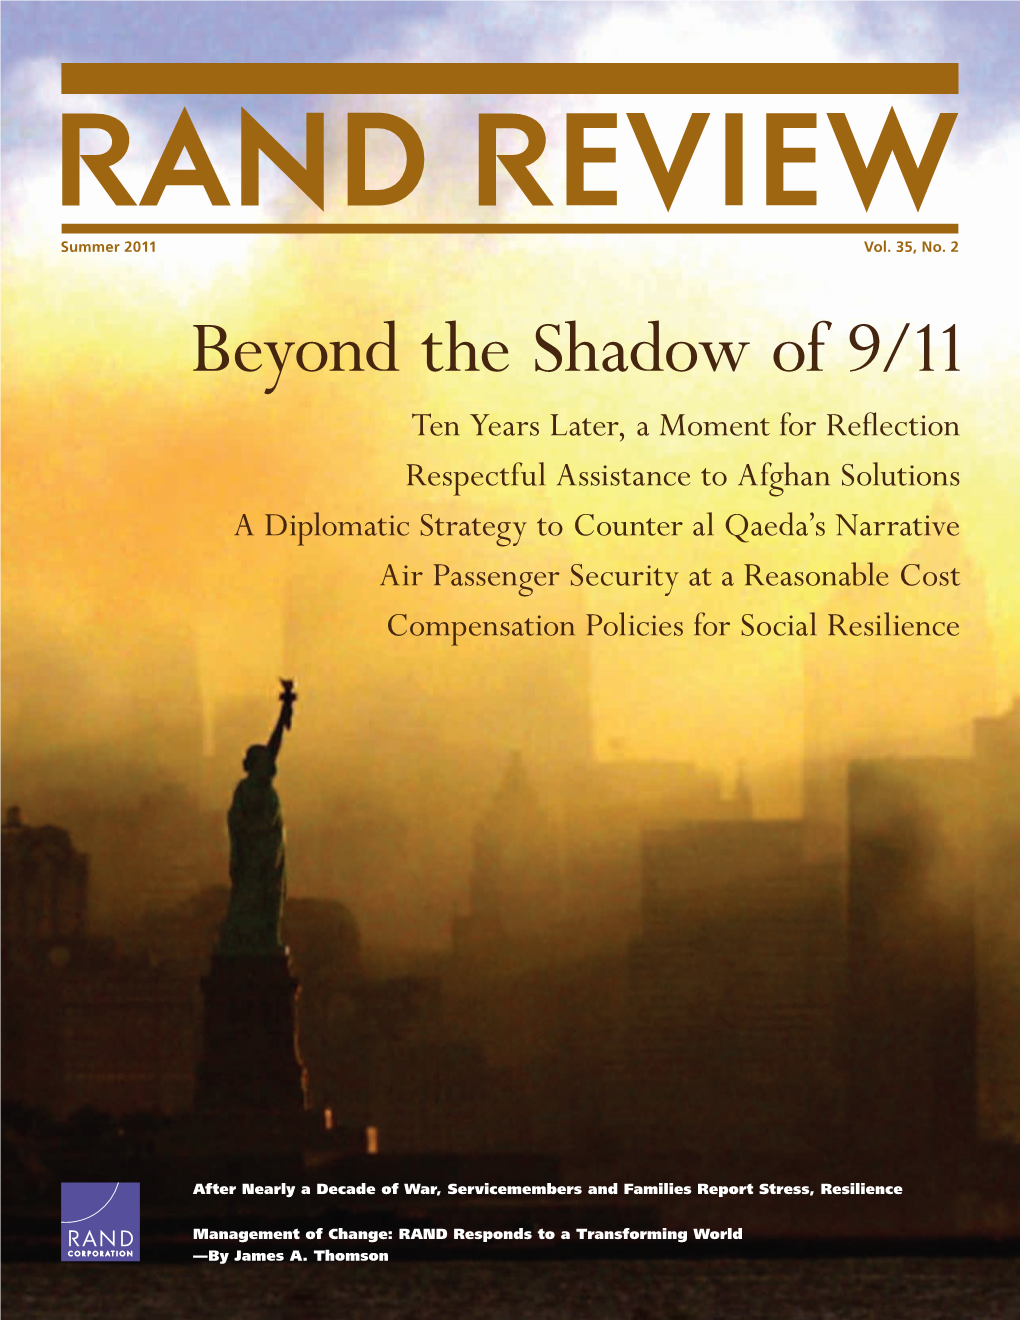 RAND Review: Vol. 35, No. 2, Summer 2011